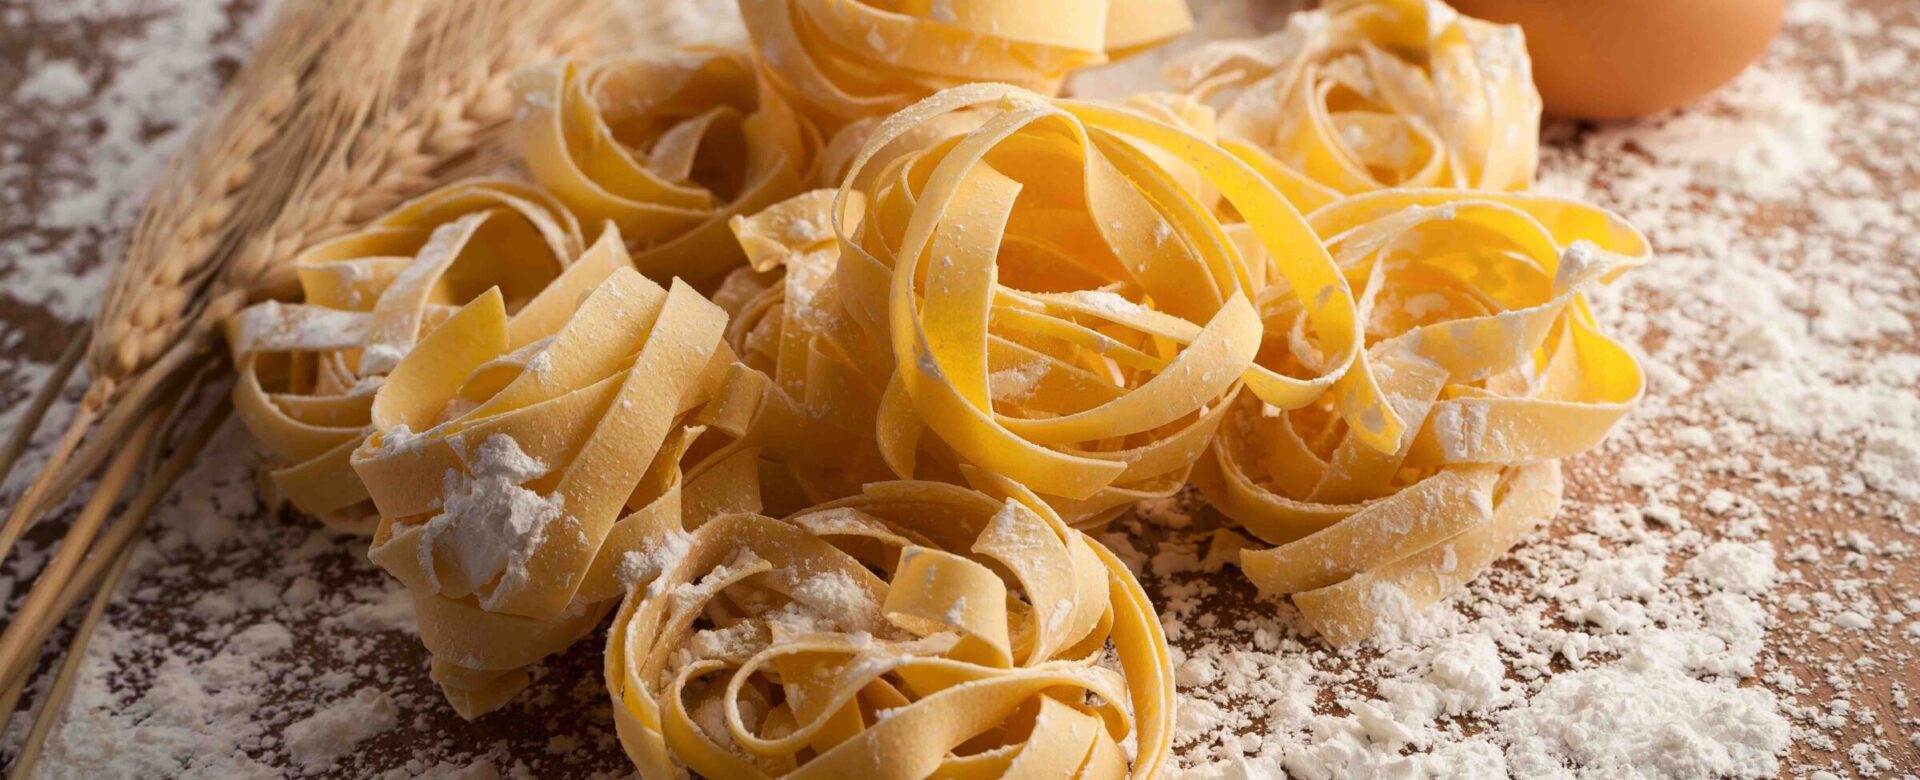 De voedingswaarde van pasta met ei